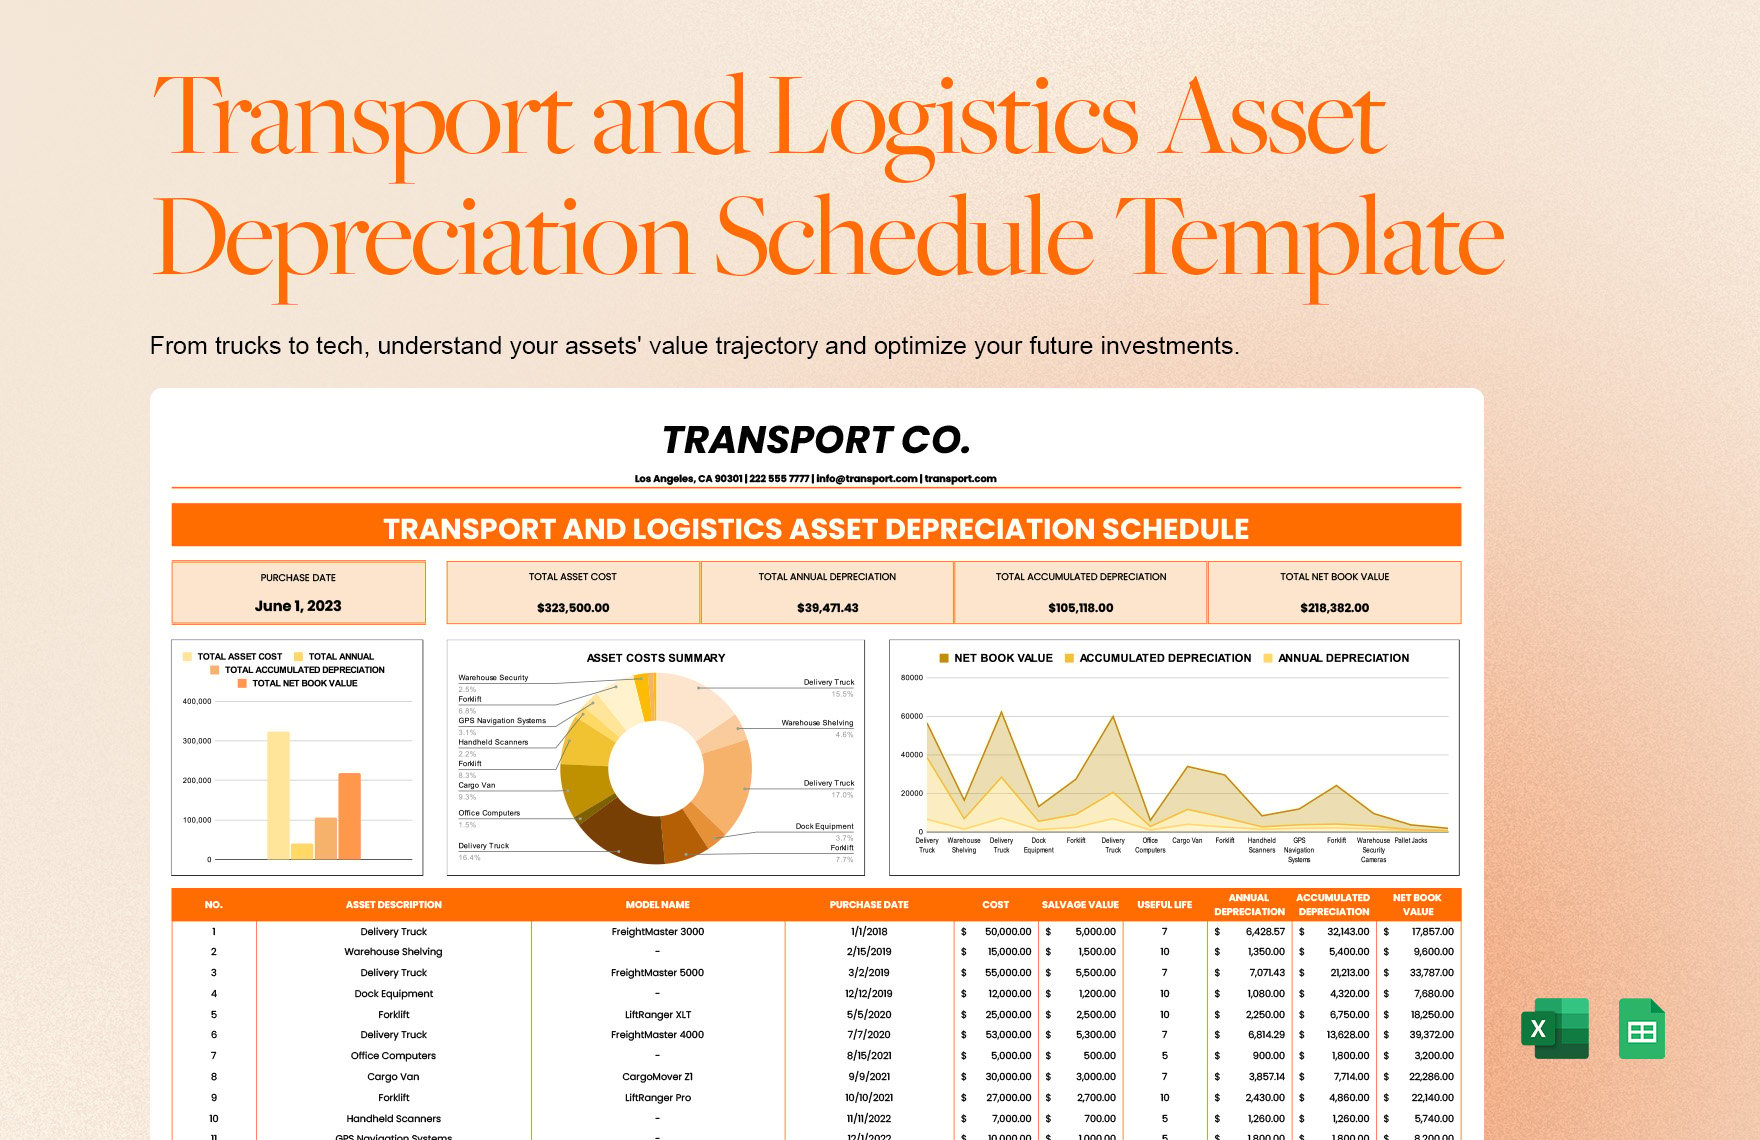 Transport and Logistics Asset Depreciation Schedule Template